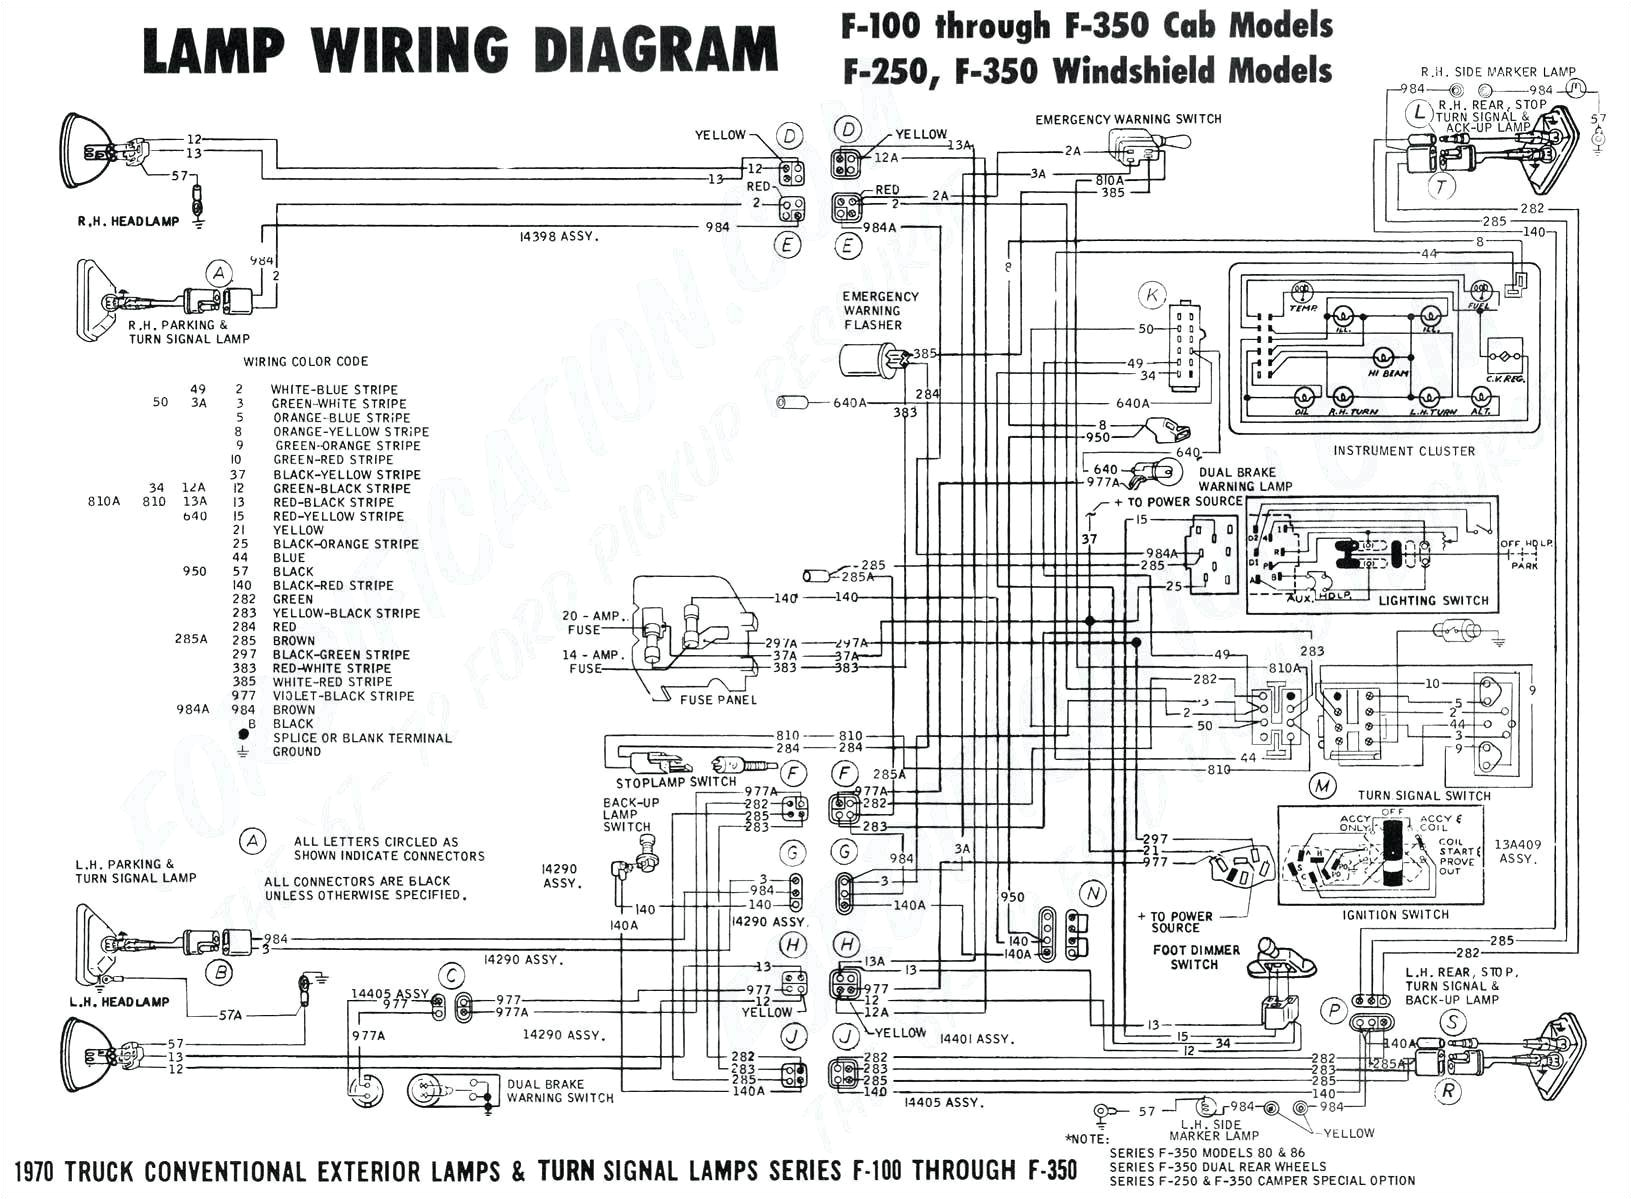 case 155 wiring diagram wiring diagram split mix case 155 wiring diagram wiring diagrams case 155